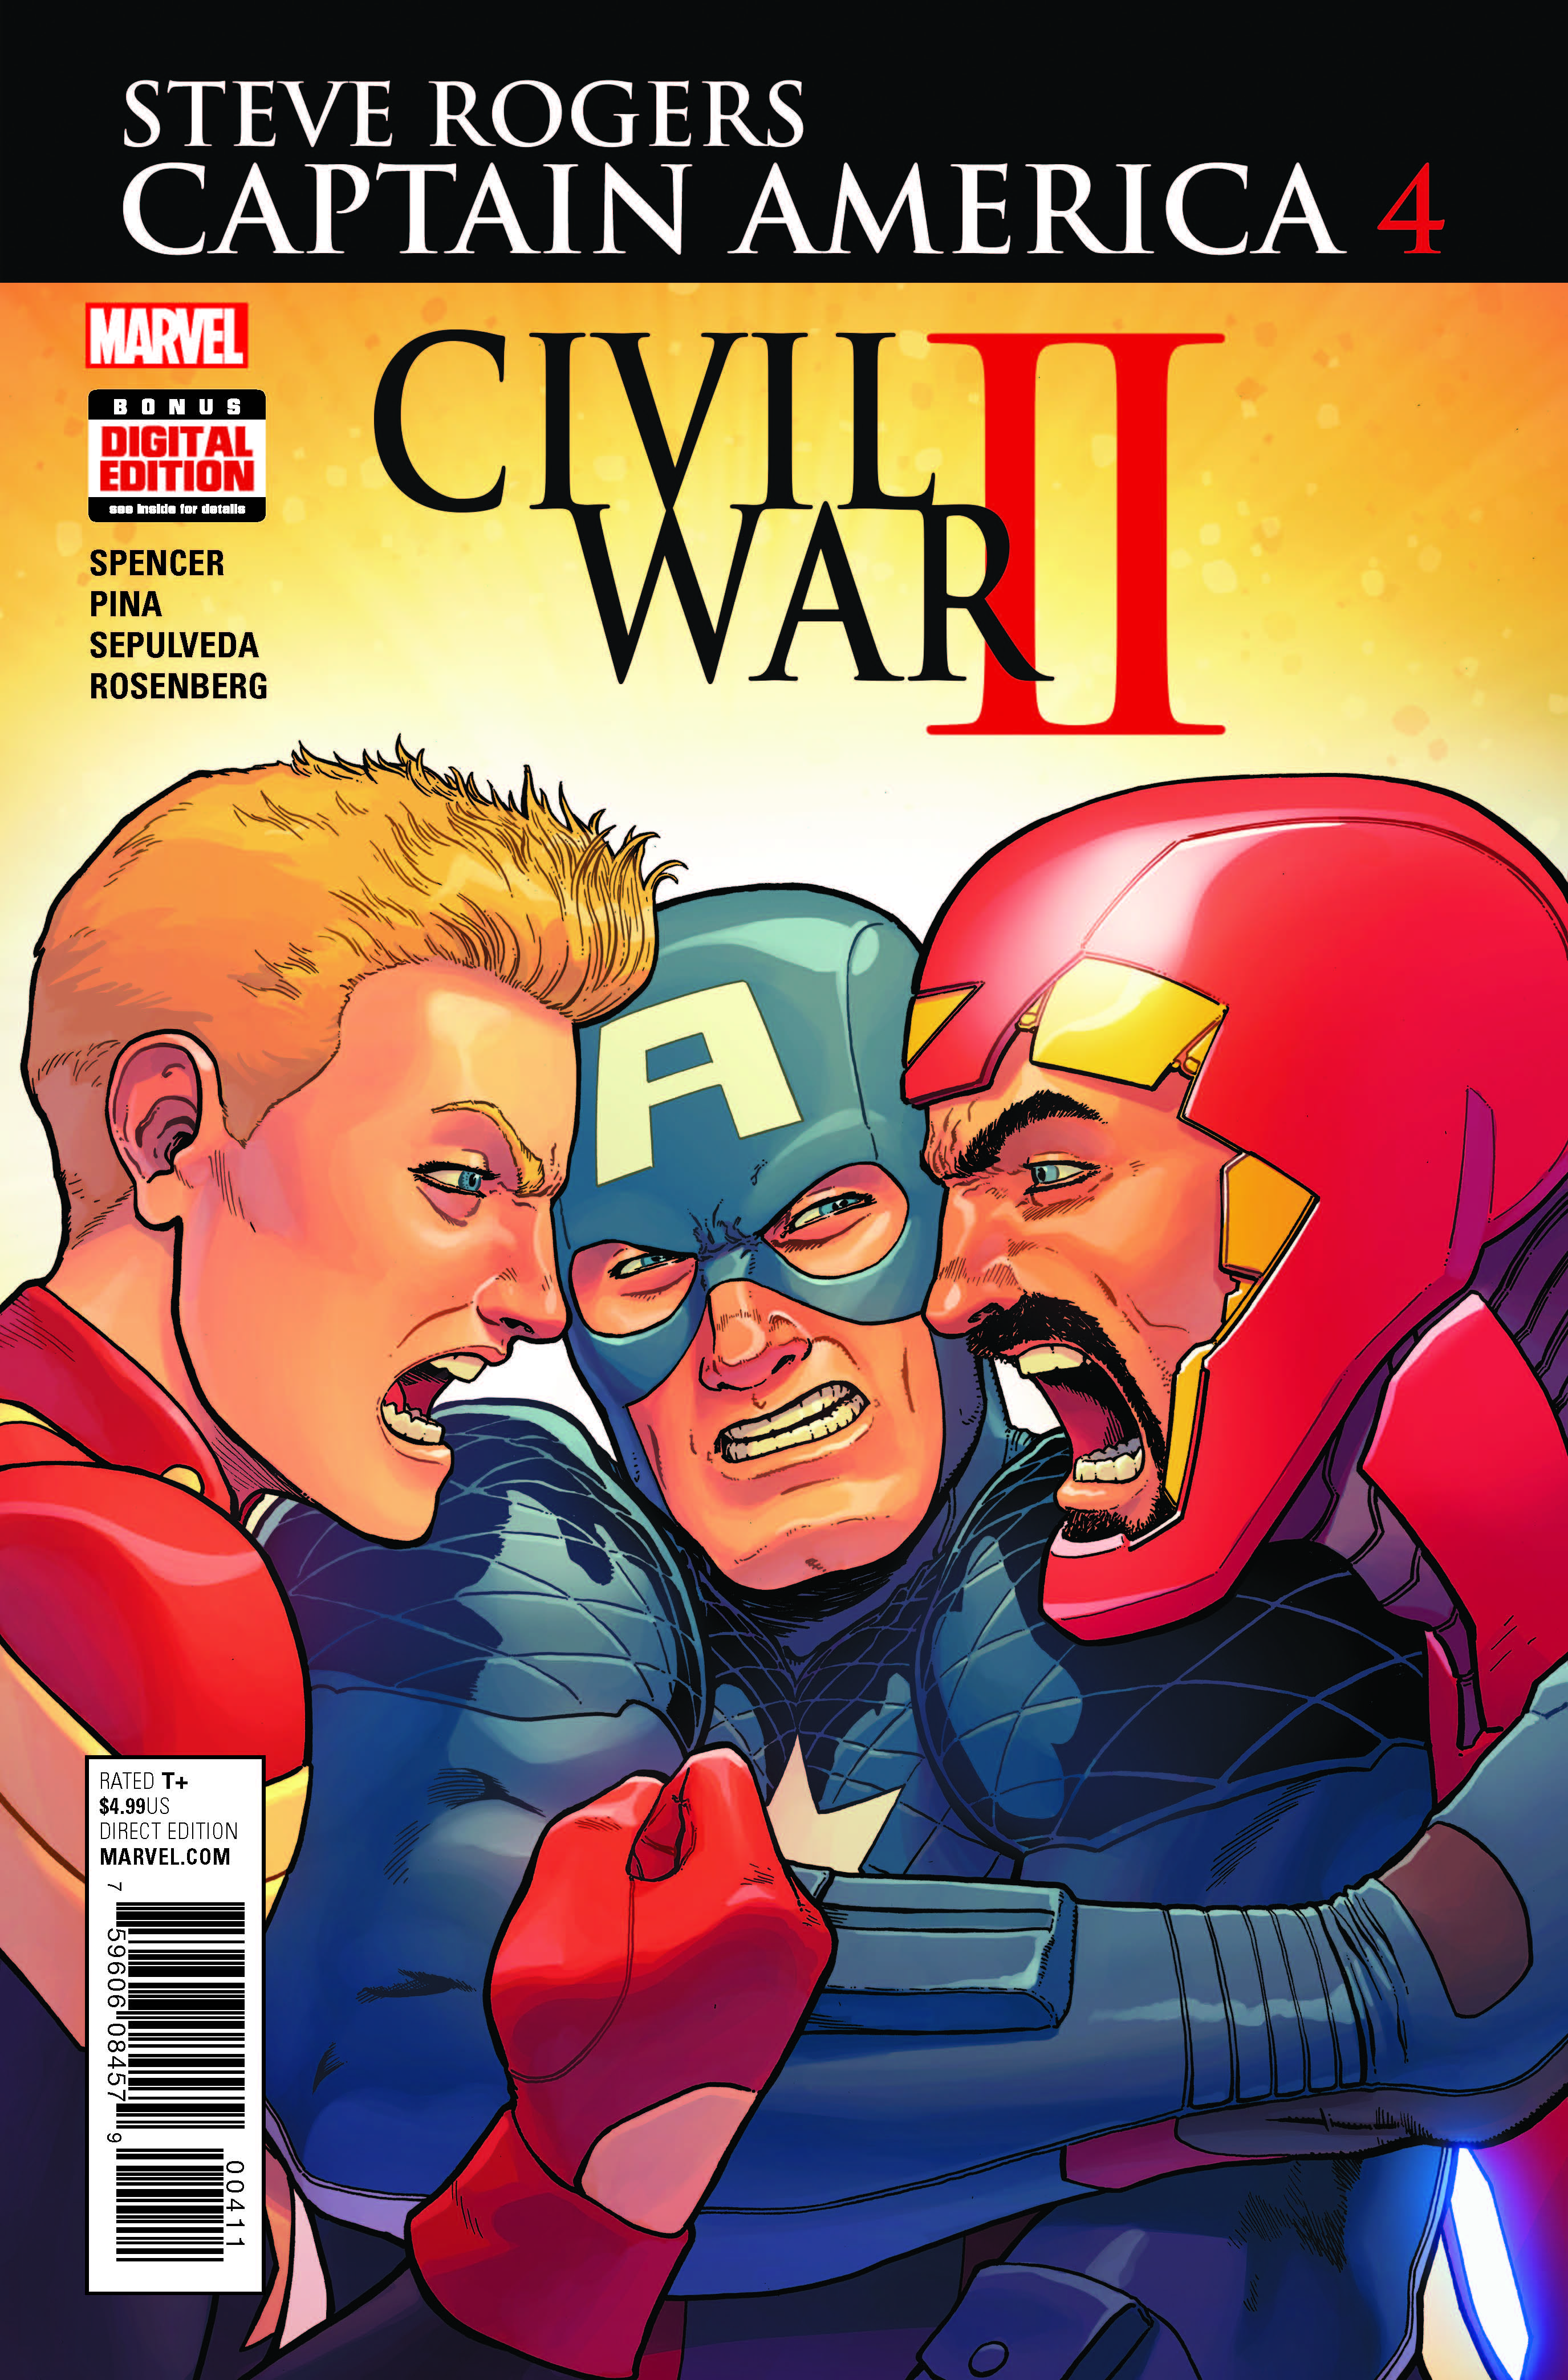 Steve Rogers: Captain America #4 Review